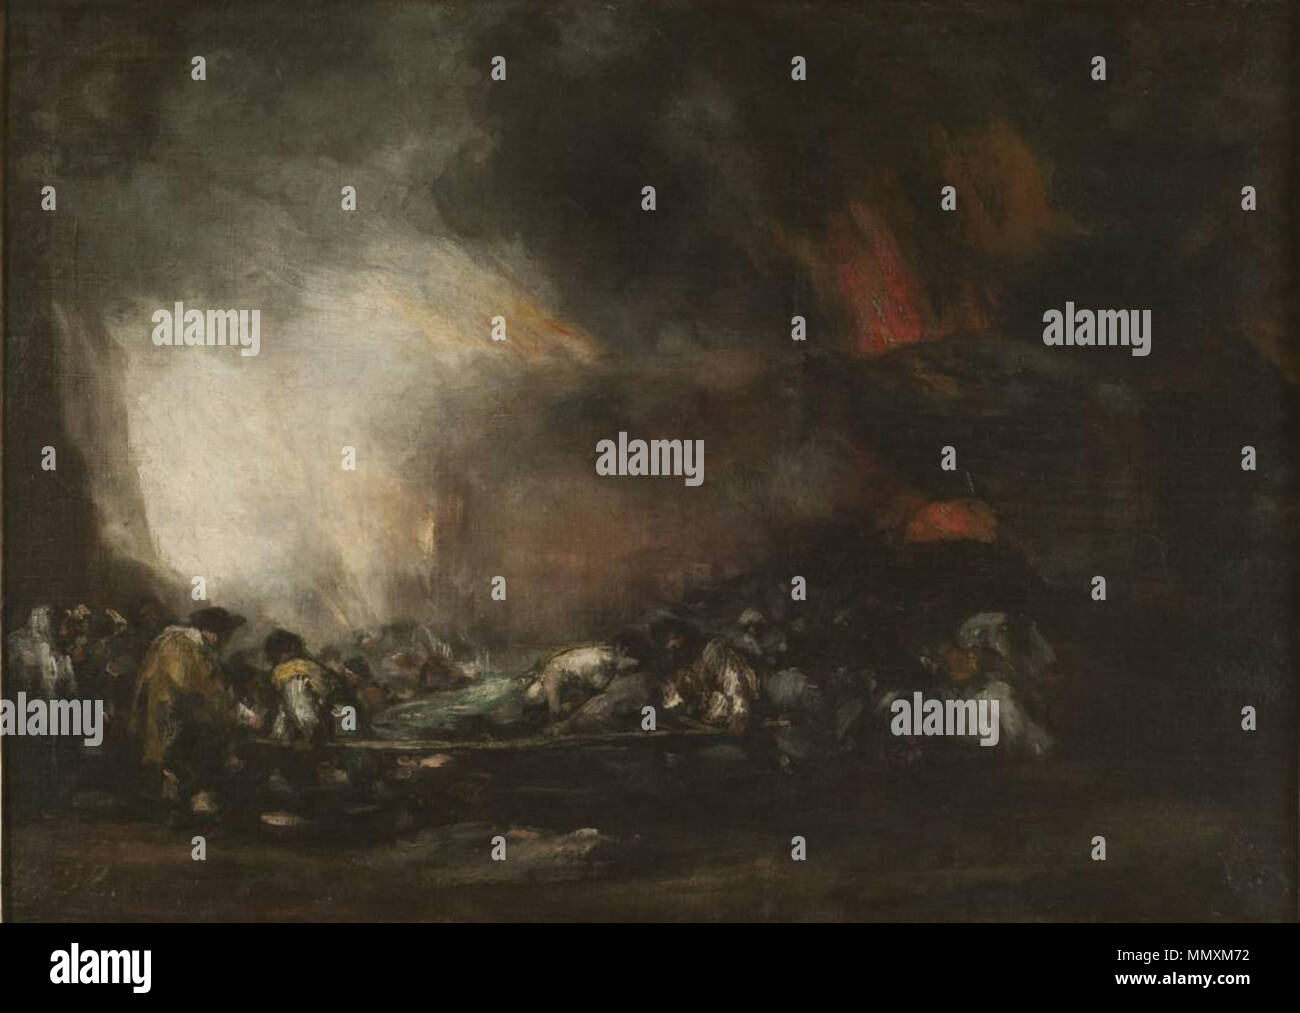 Español: Incendio de un hospital . circa 1808. Francisco de Goya - Incendio de un hospital Stock Photo